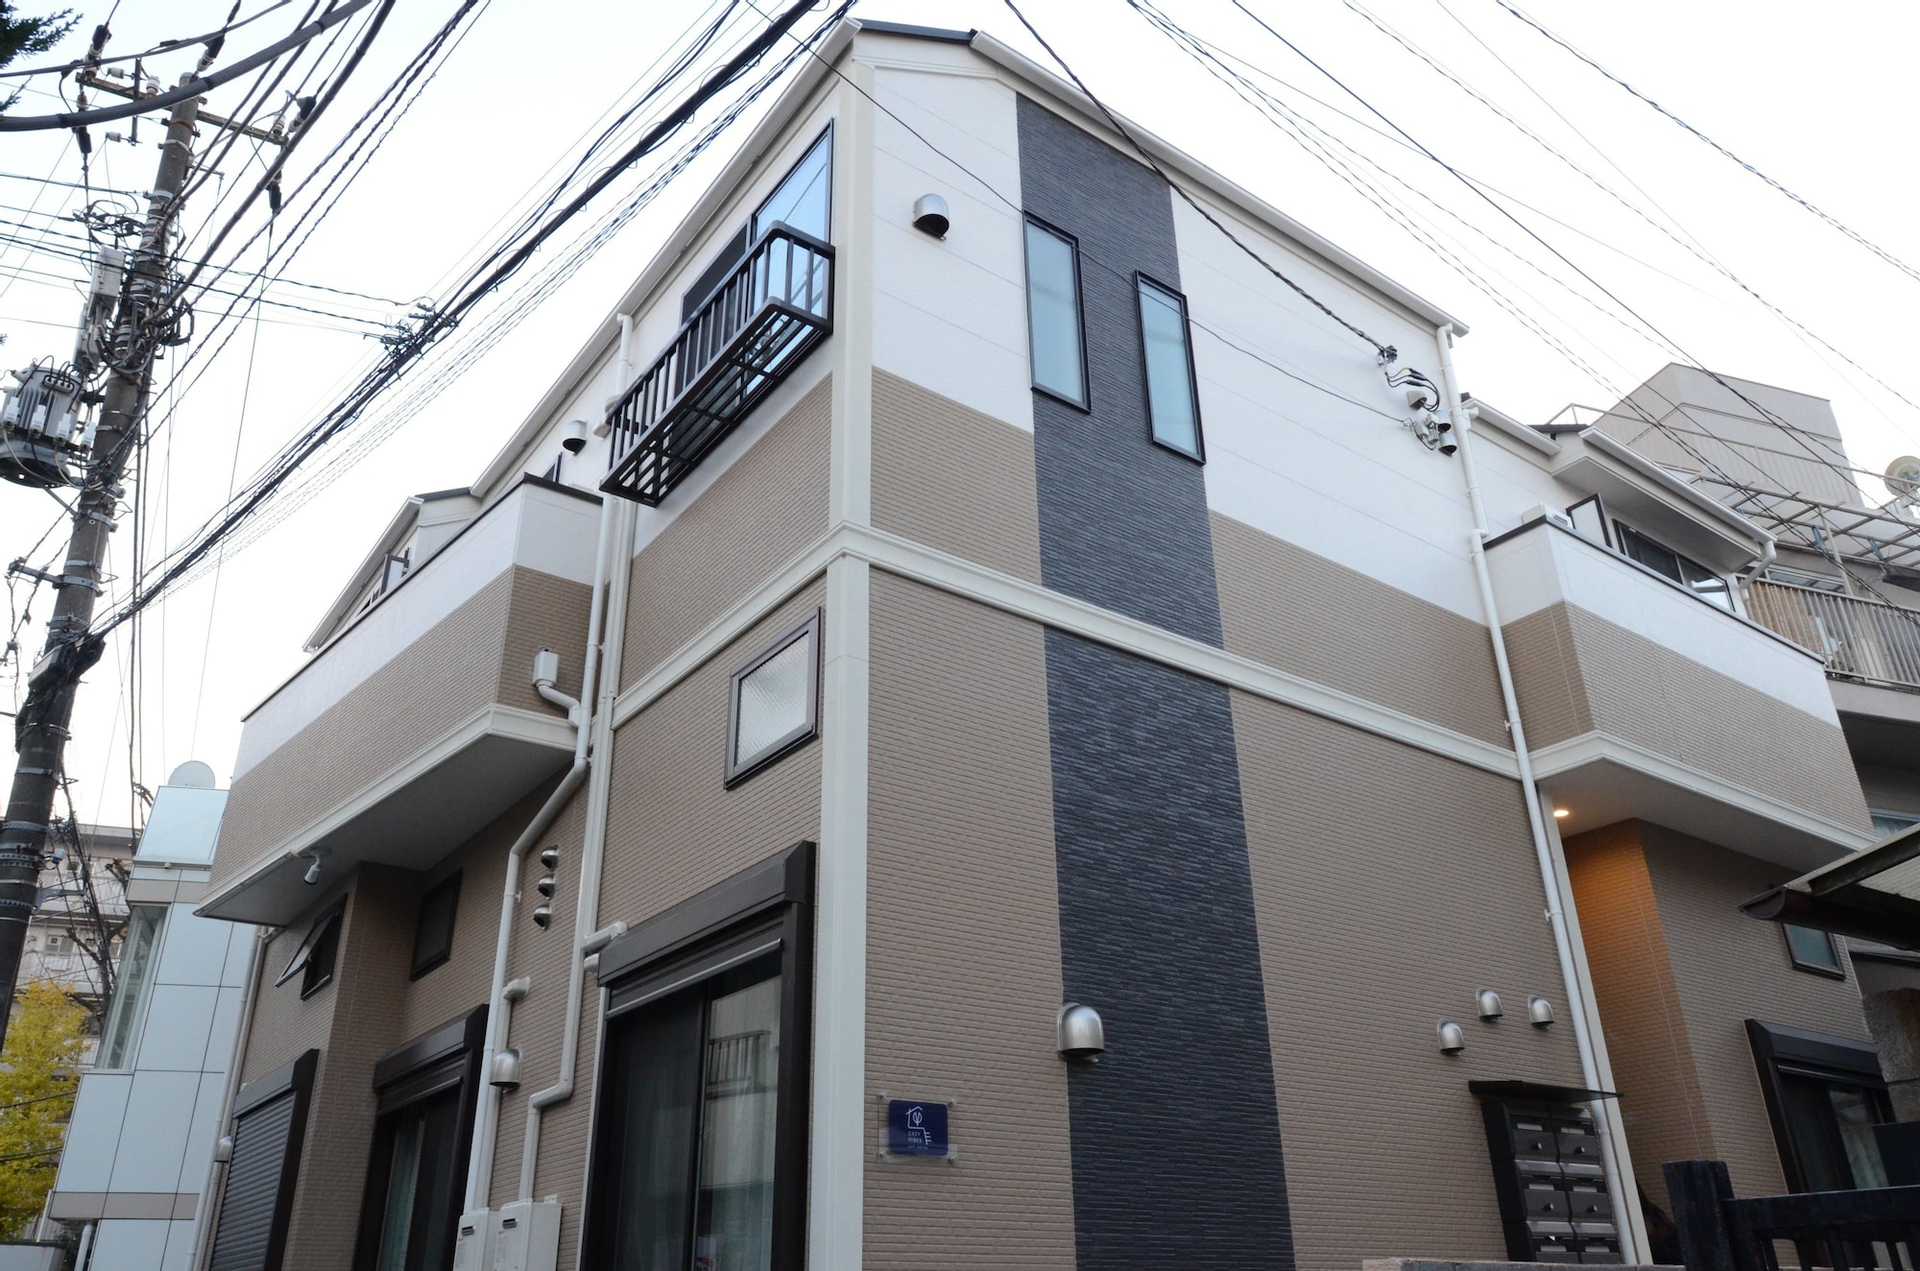 Exterior & Views 1, Cozy Vibes Apartment Hotel, Shinjuku